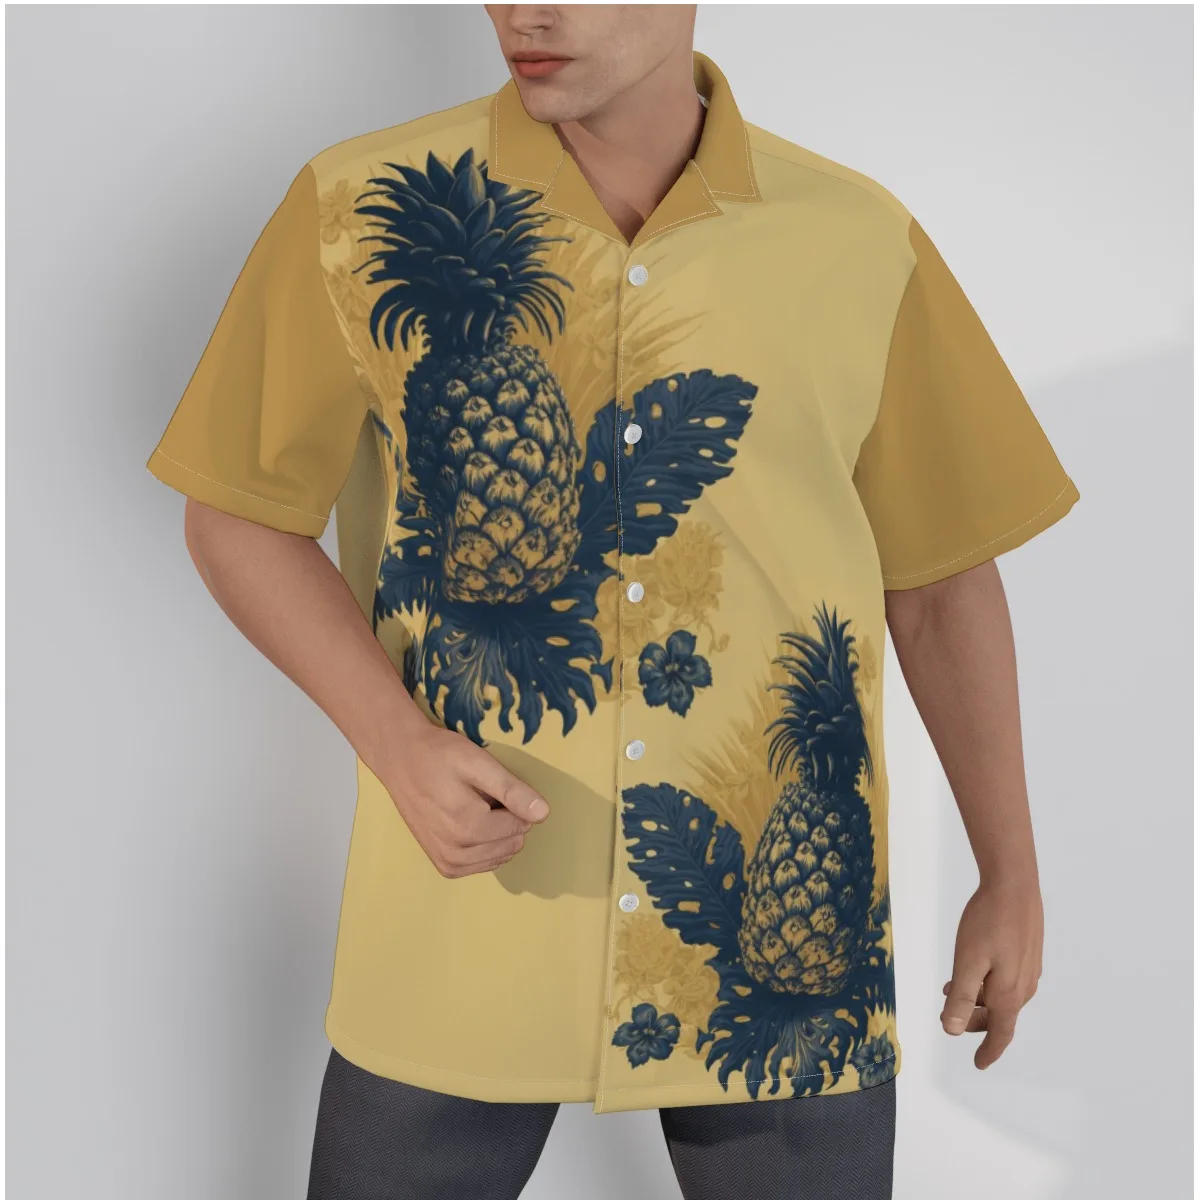 101741 95efe8a5 9802 4435 b935 0b6d2c98060b jpeg Pineapple Hawaiian Shirt pineapple Hawaiian Shirt